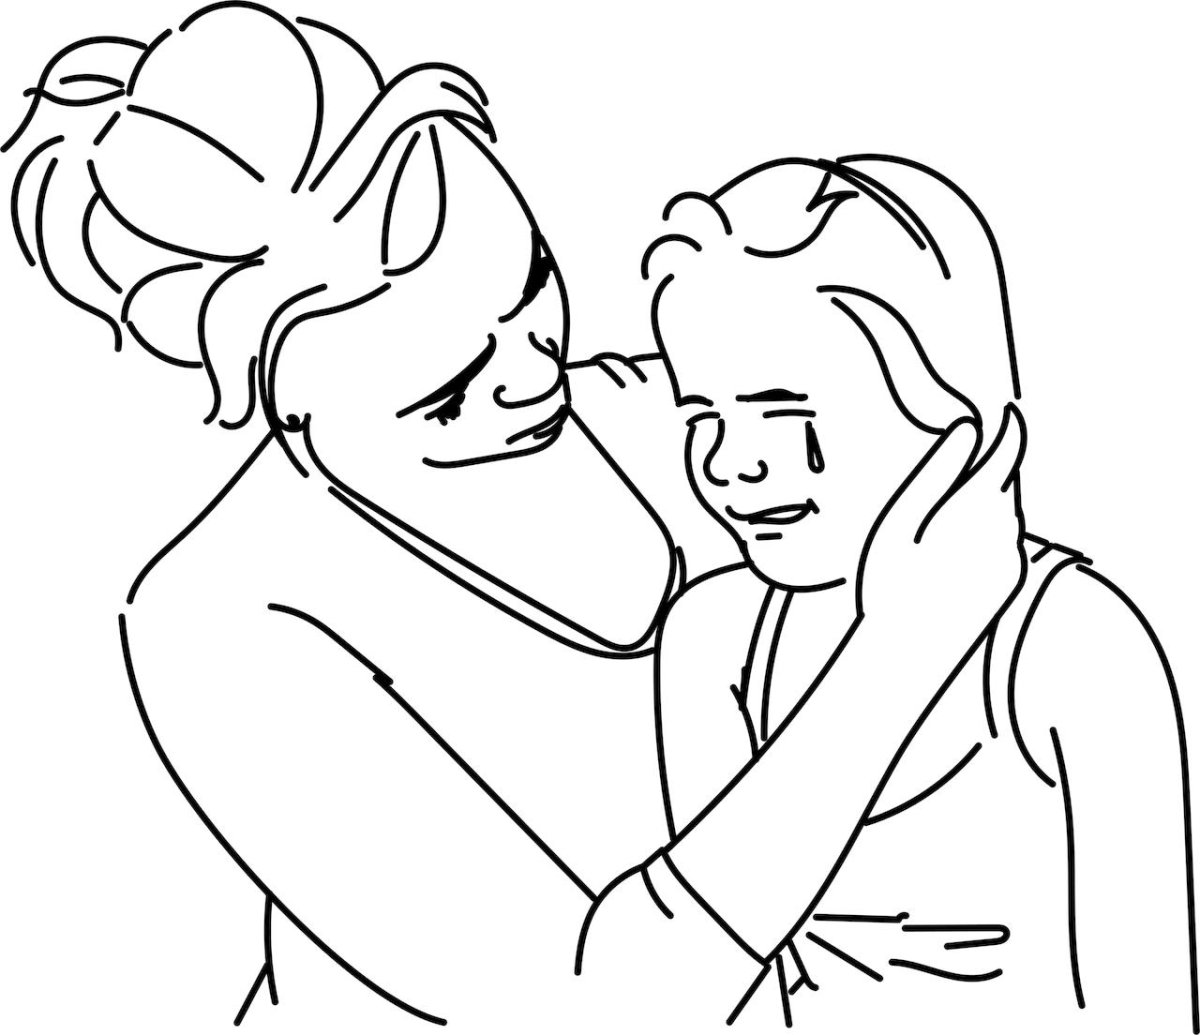 Раскраска мама с ребенком на руках